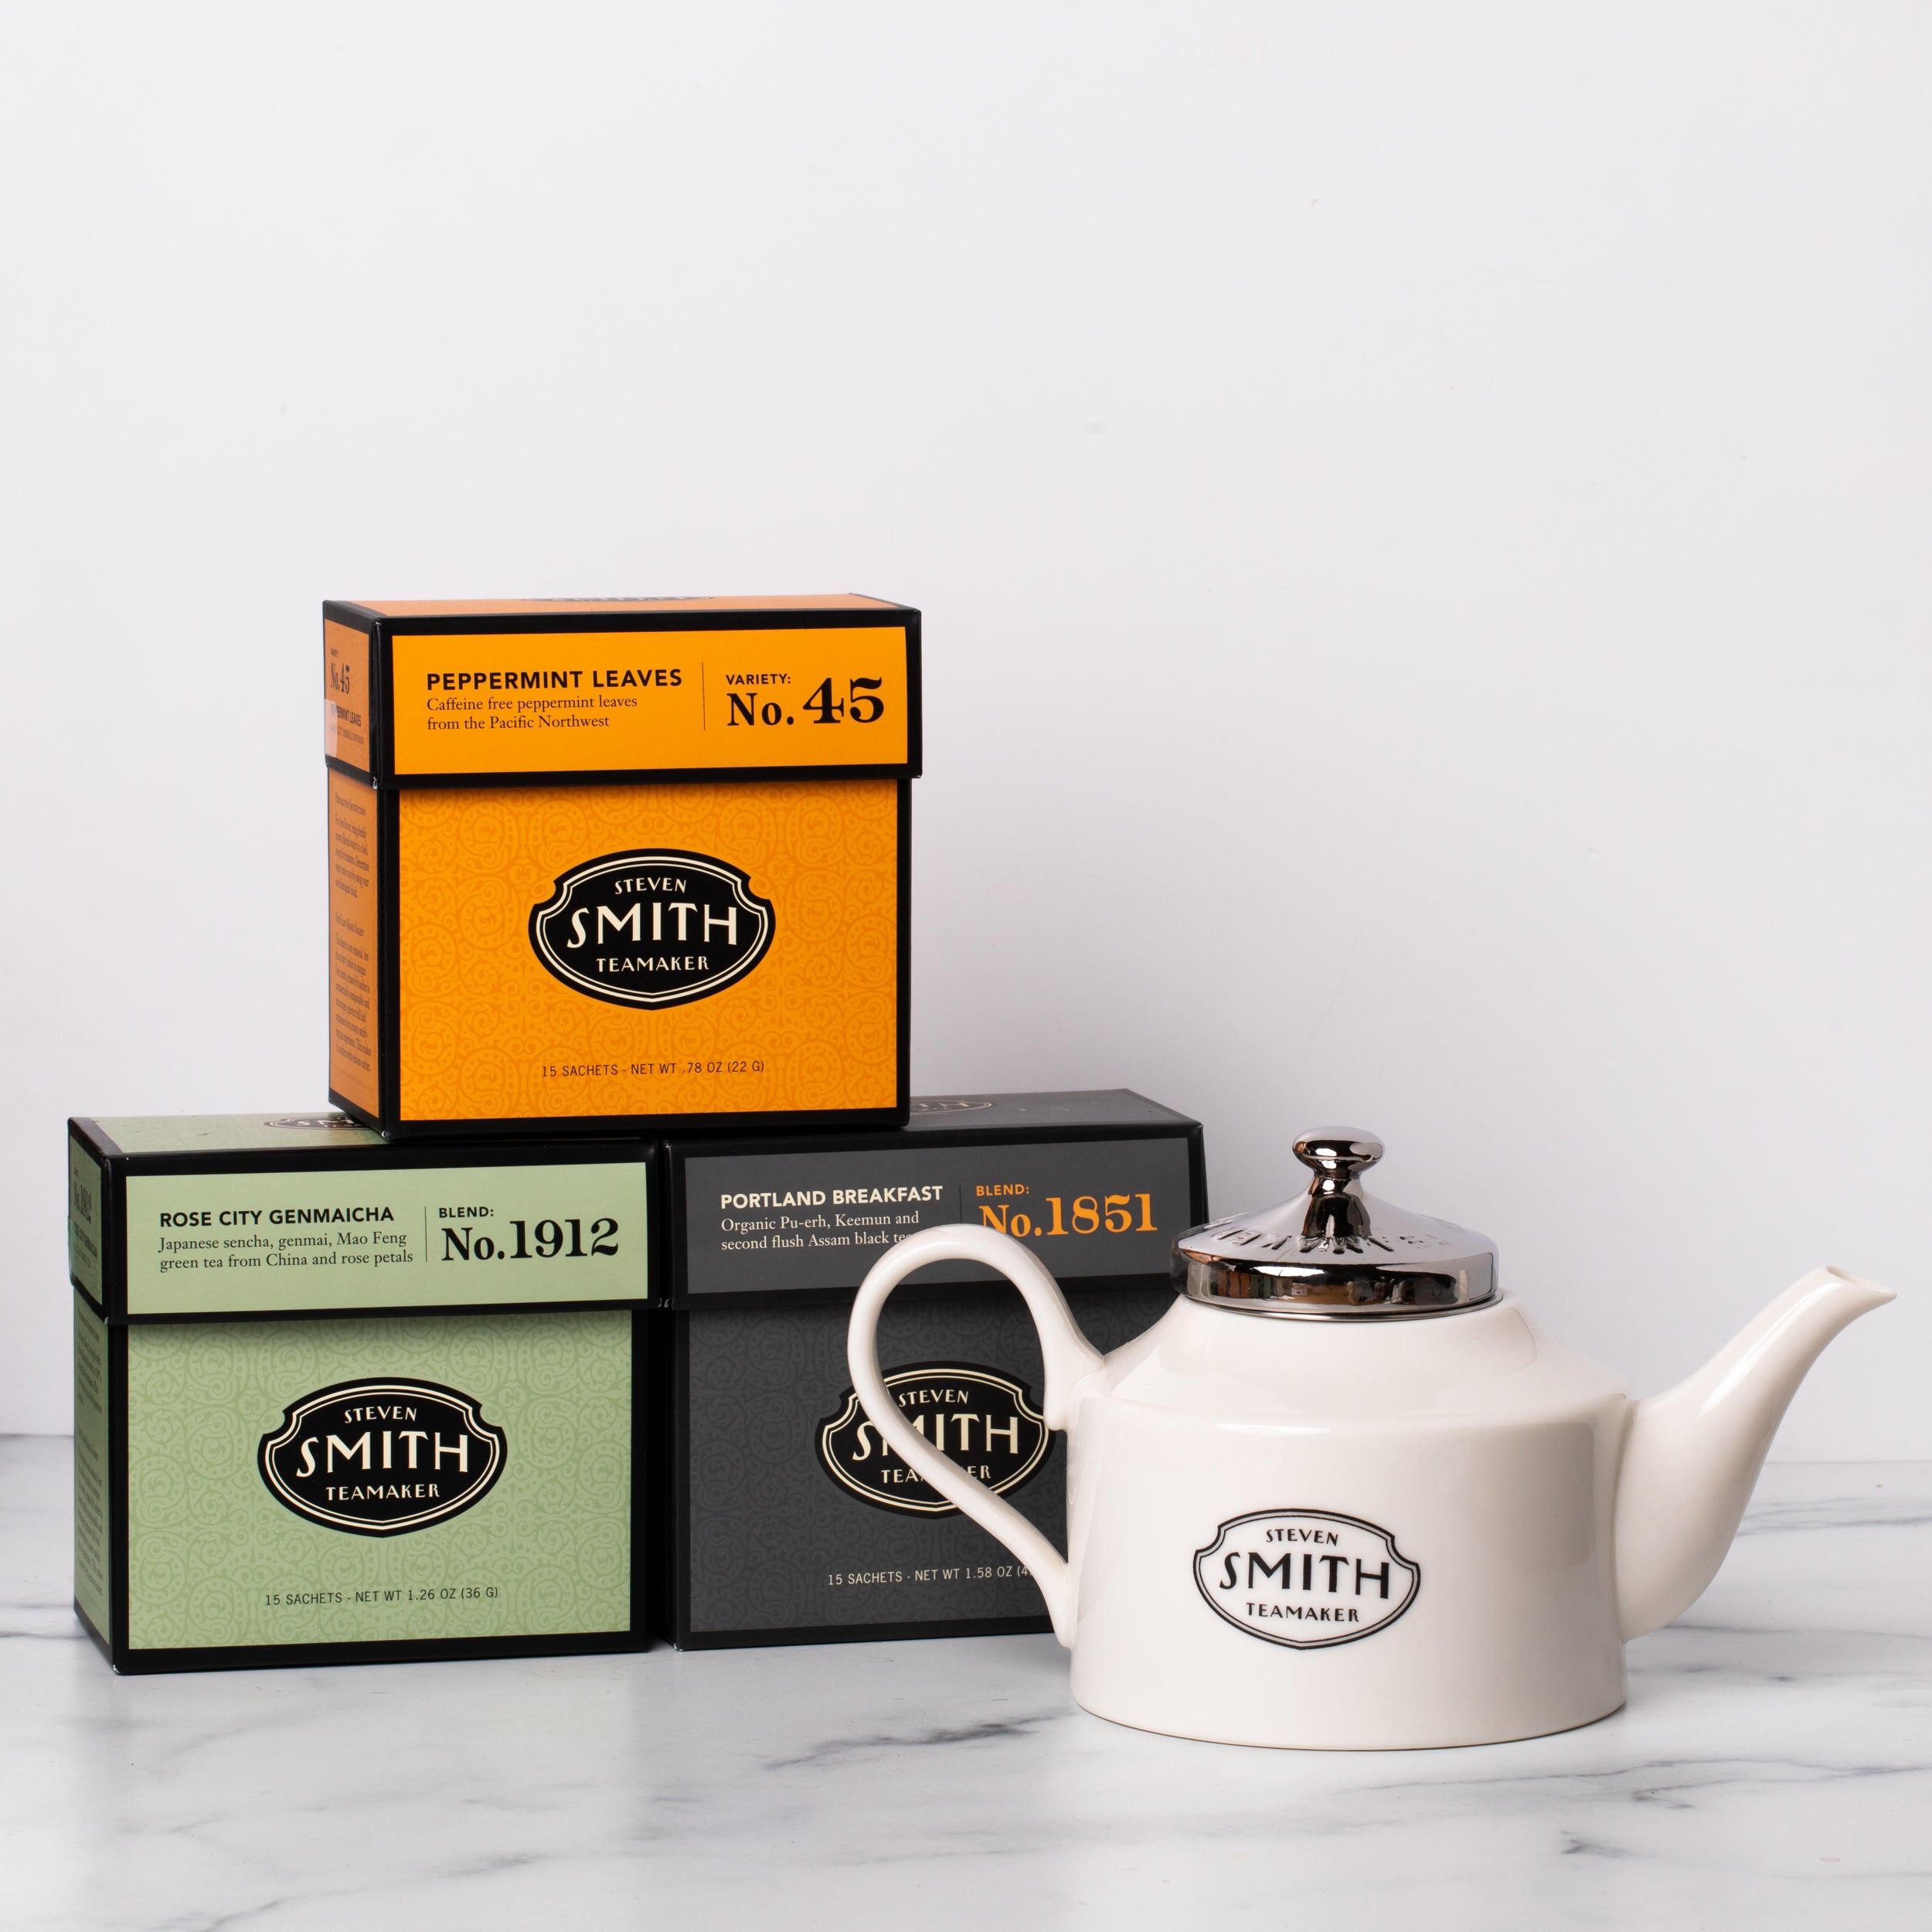 One black carton, one orange carton and one green carton of tea with a white porcelain teapot.